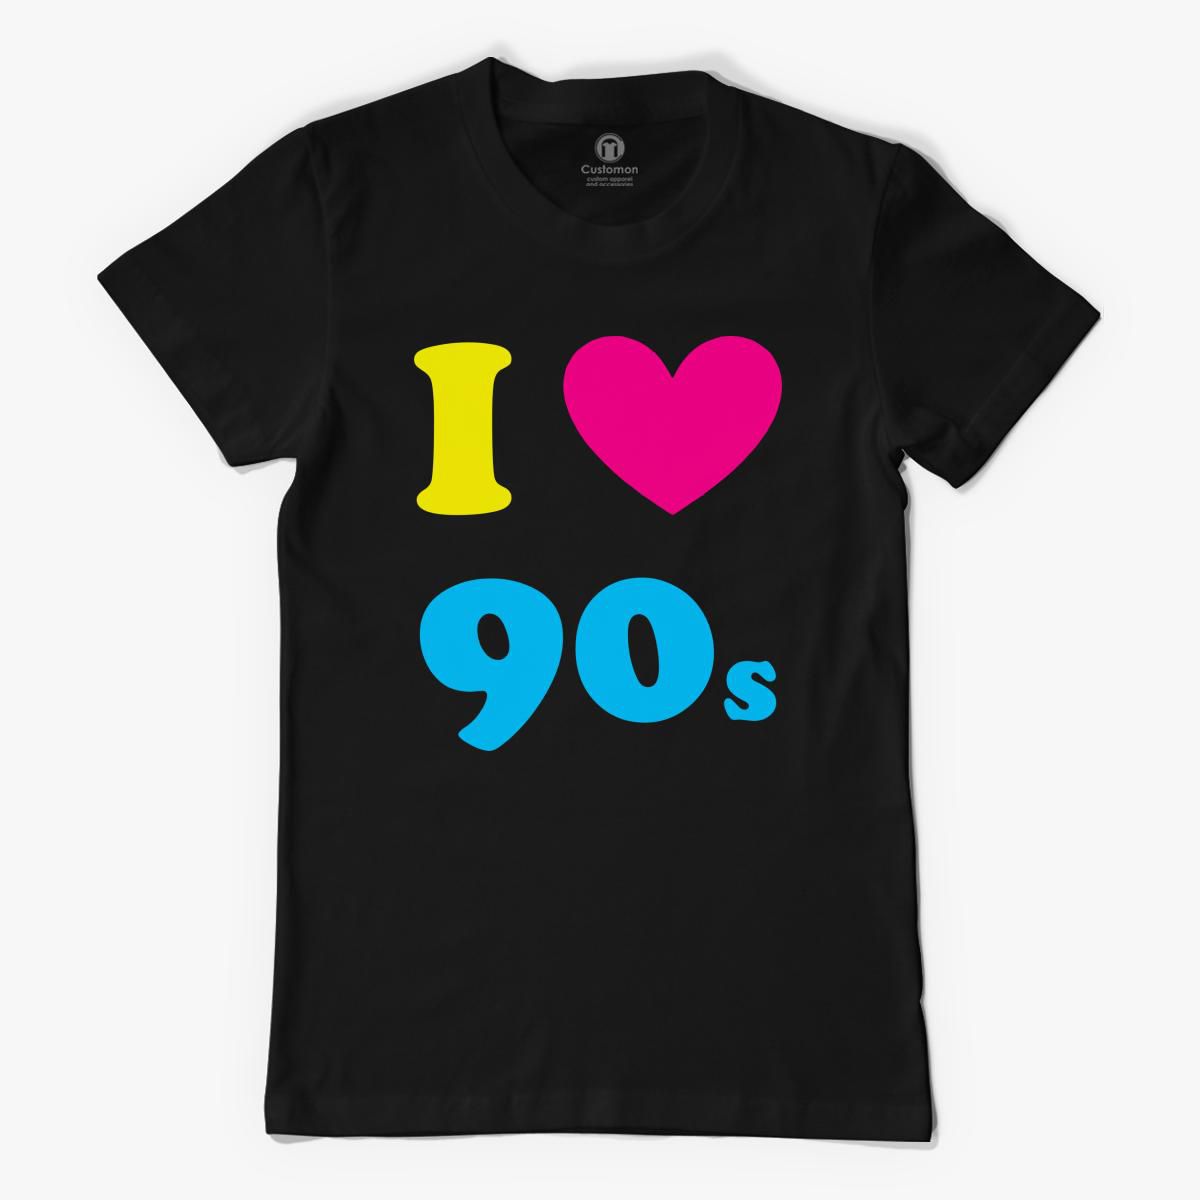 I LOVE THE 90s Women's T-shirt - Customon